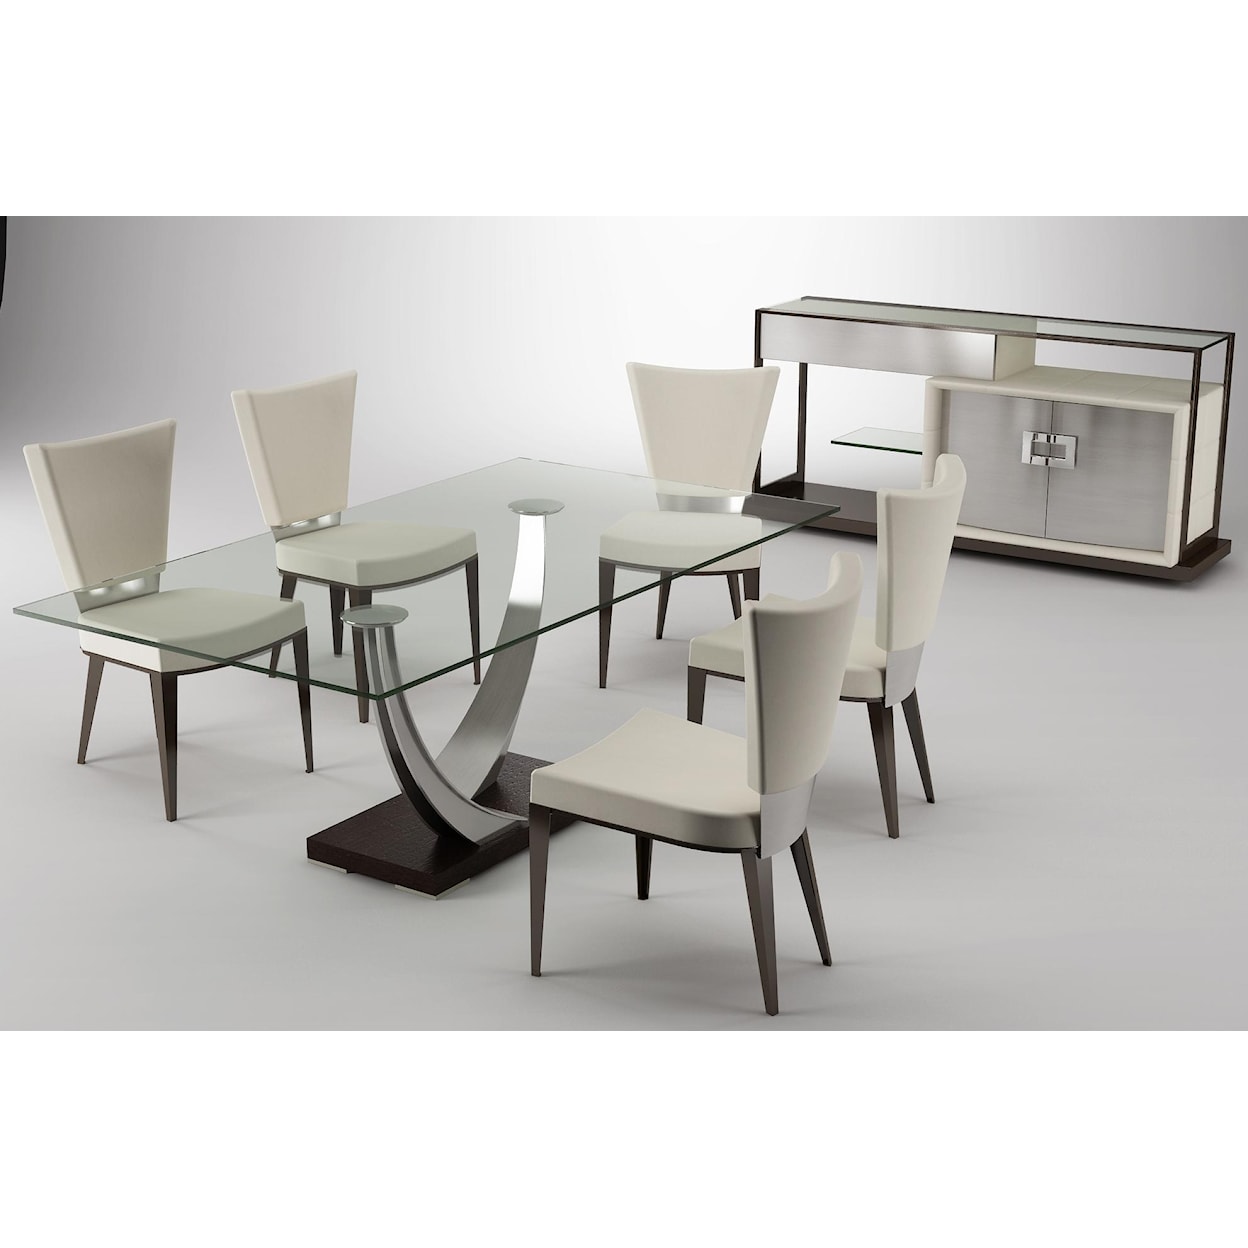 Elite Modern Modern Dining Monroe Side Chair